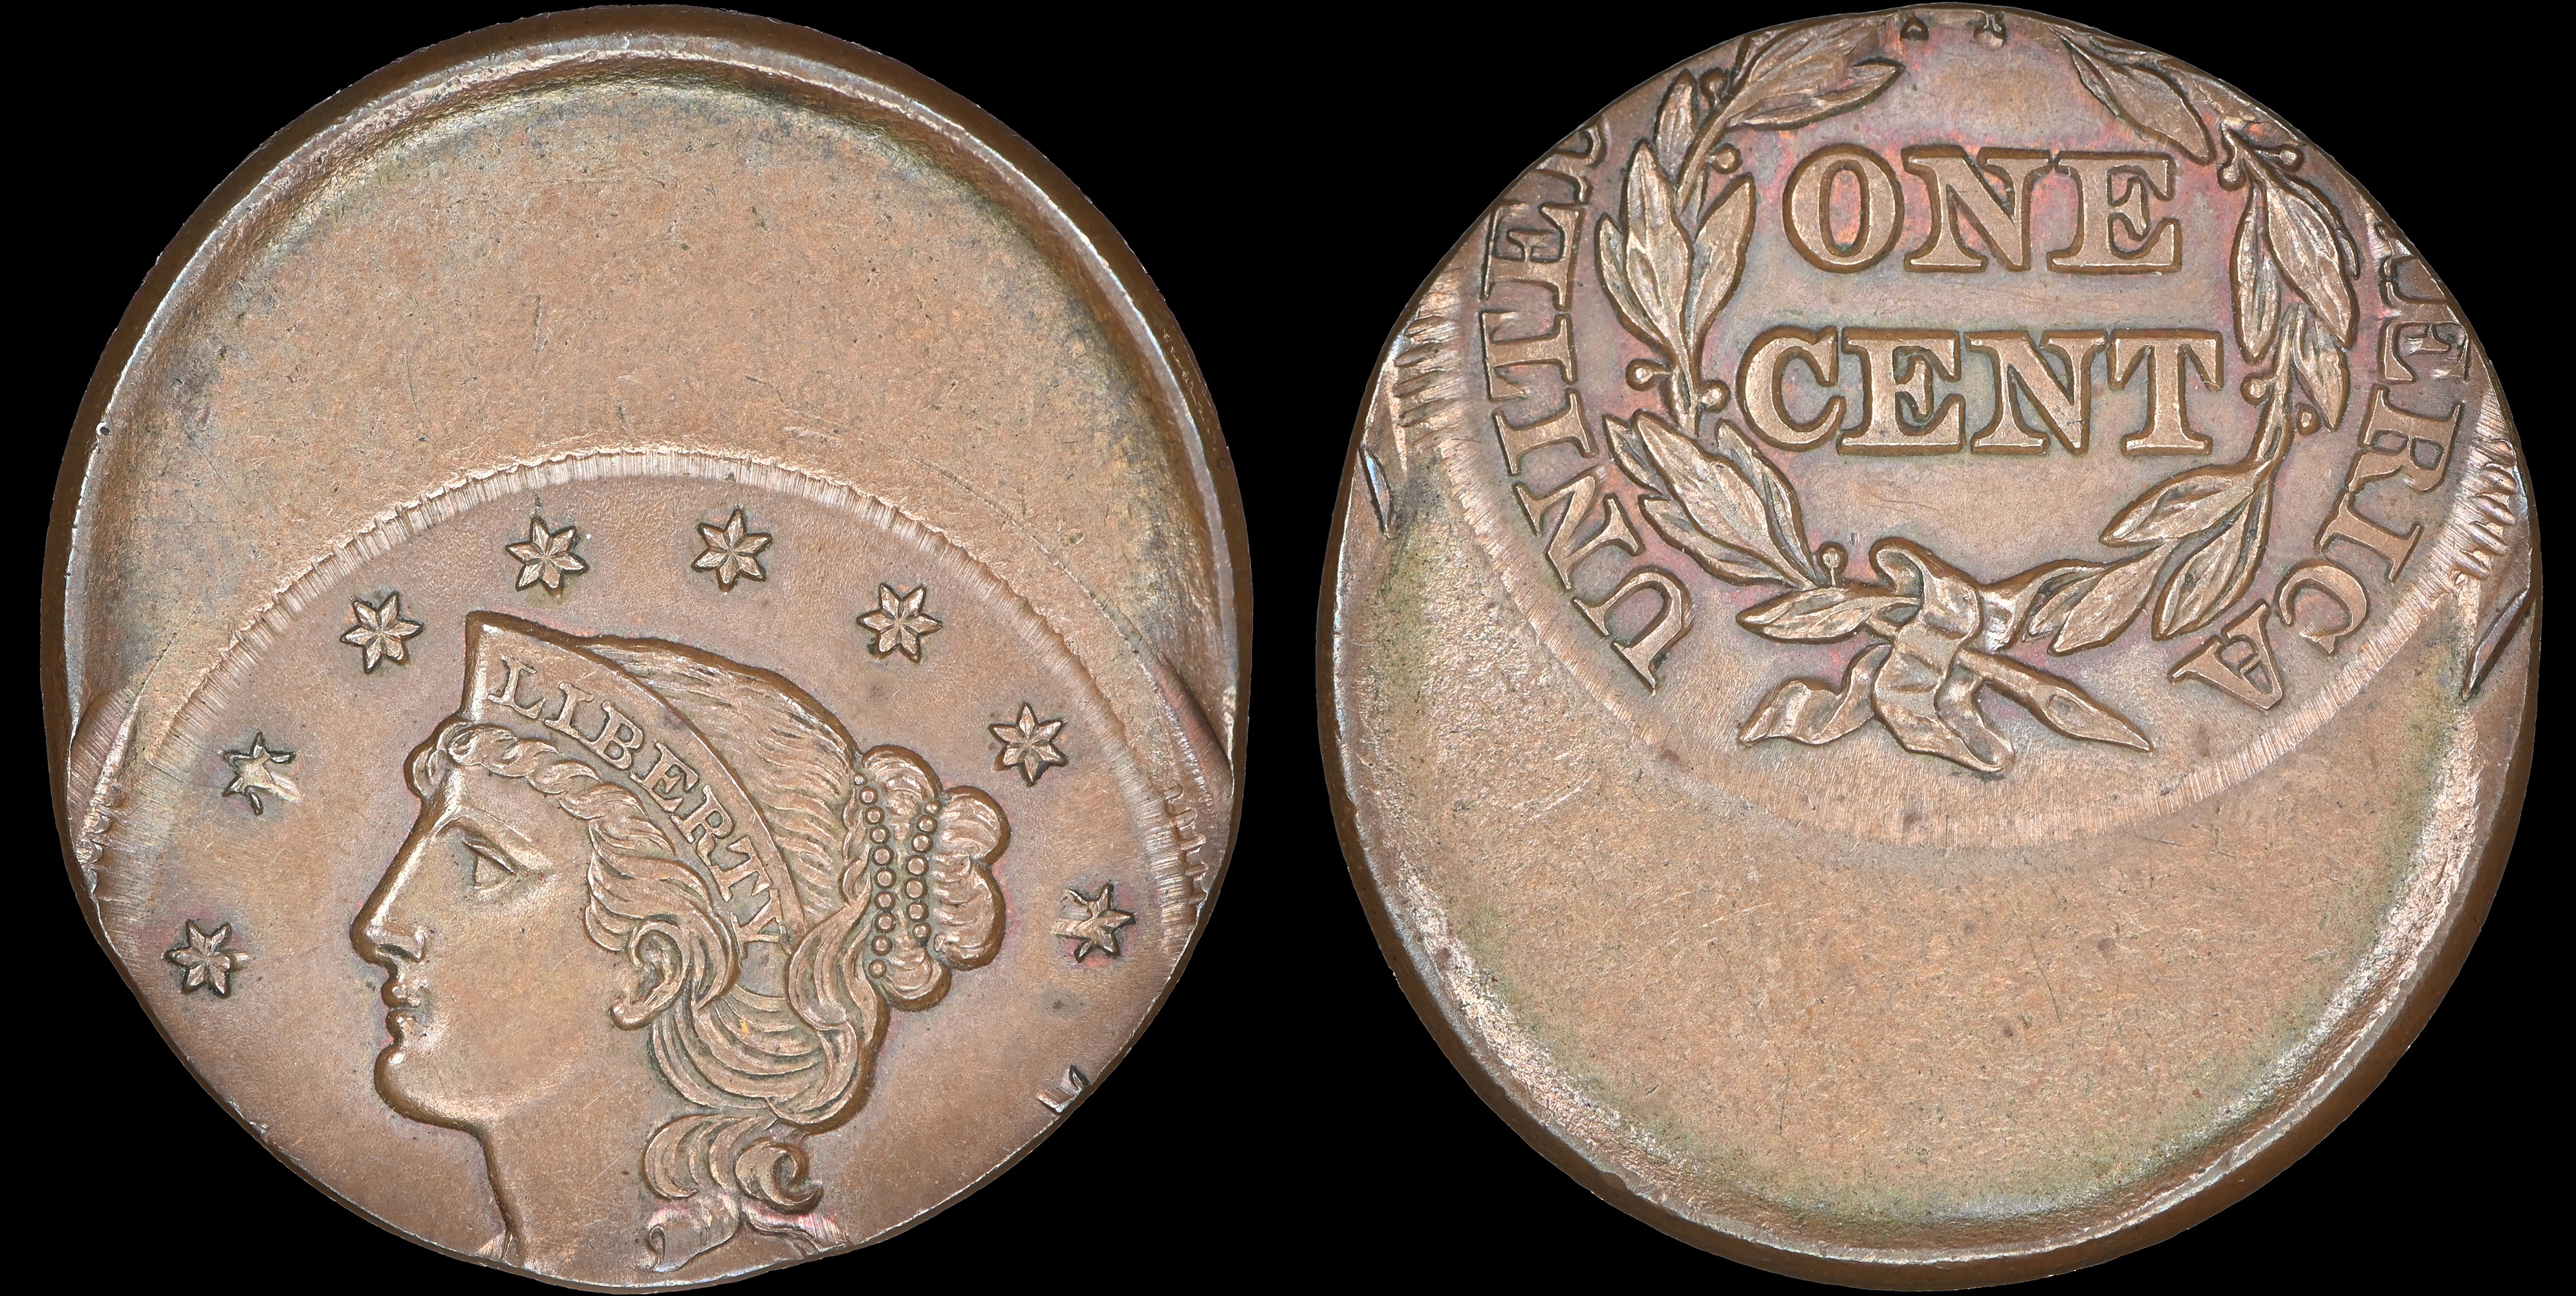 MINT ERROR AMERIKAN CENT (1843-1857) Mature Head Large Cent -- Struck 30% Mint Errror MS 64